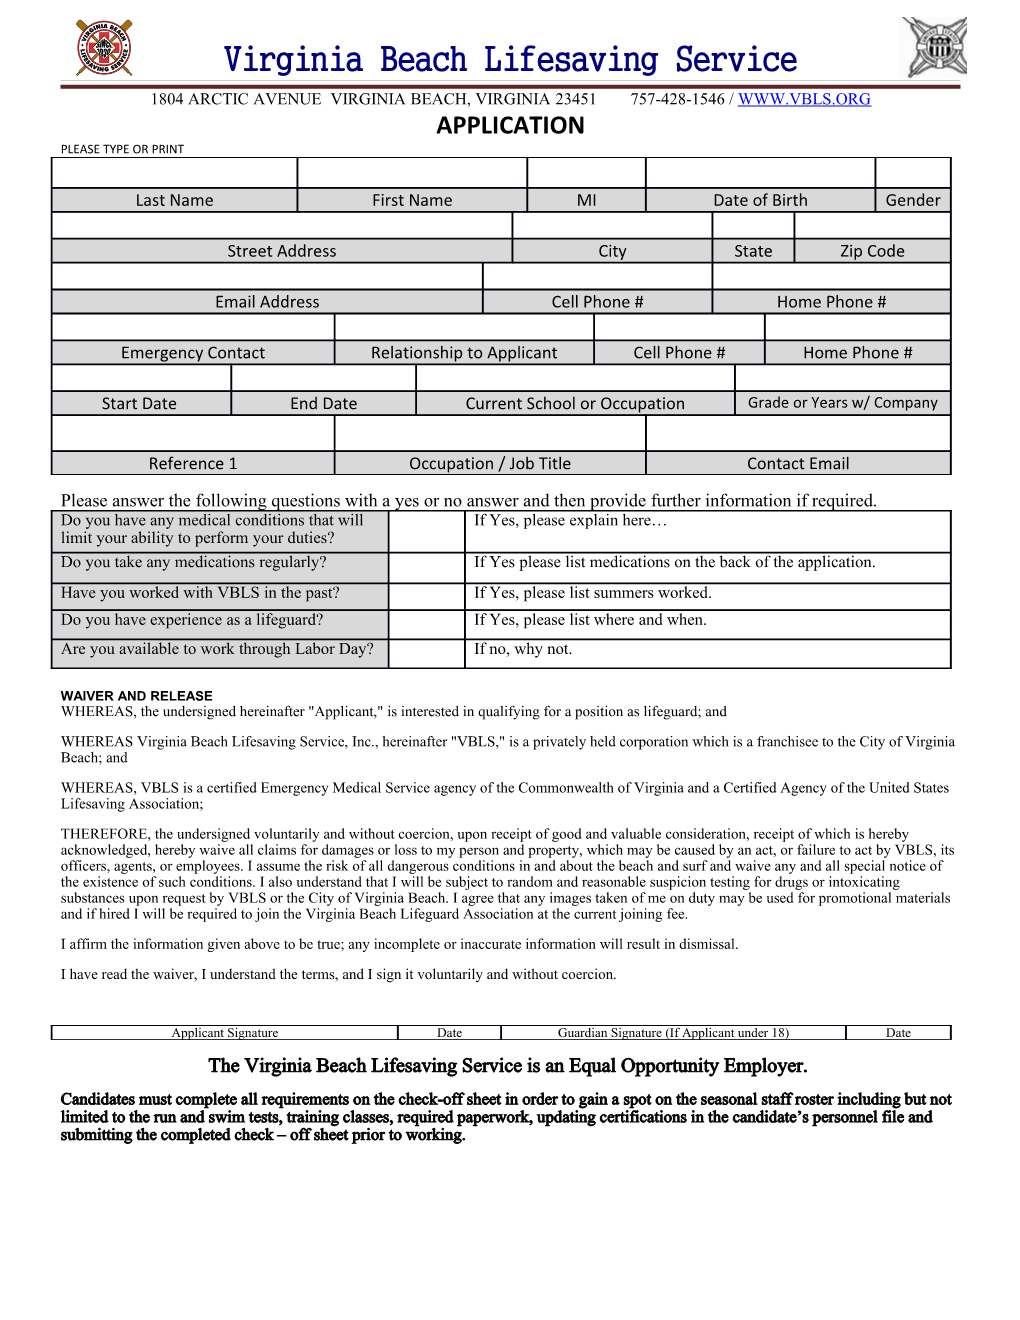 Virginia Beach Lifesaving Service Application for Employment